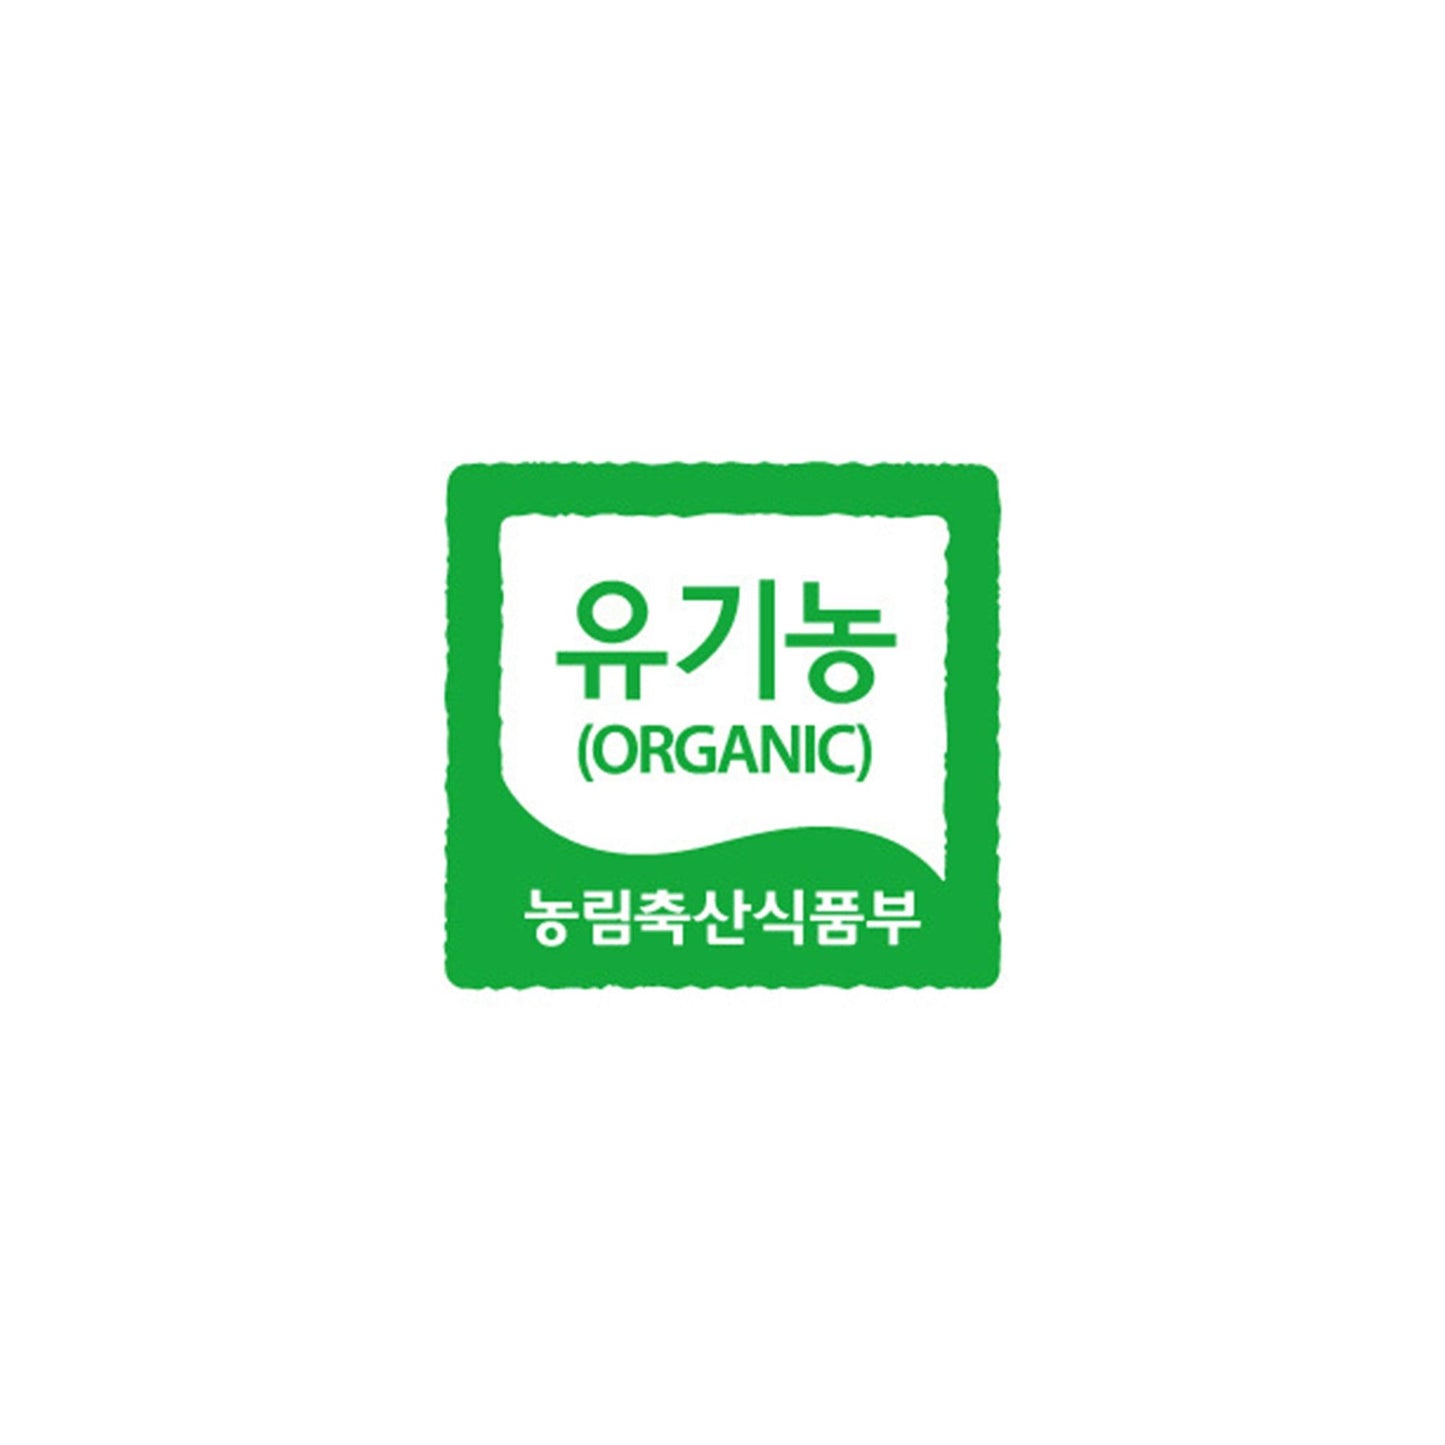 Extra Virgin Sprouted Perilla Oil - Kim'C Market